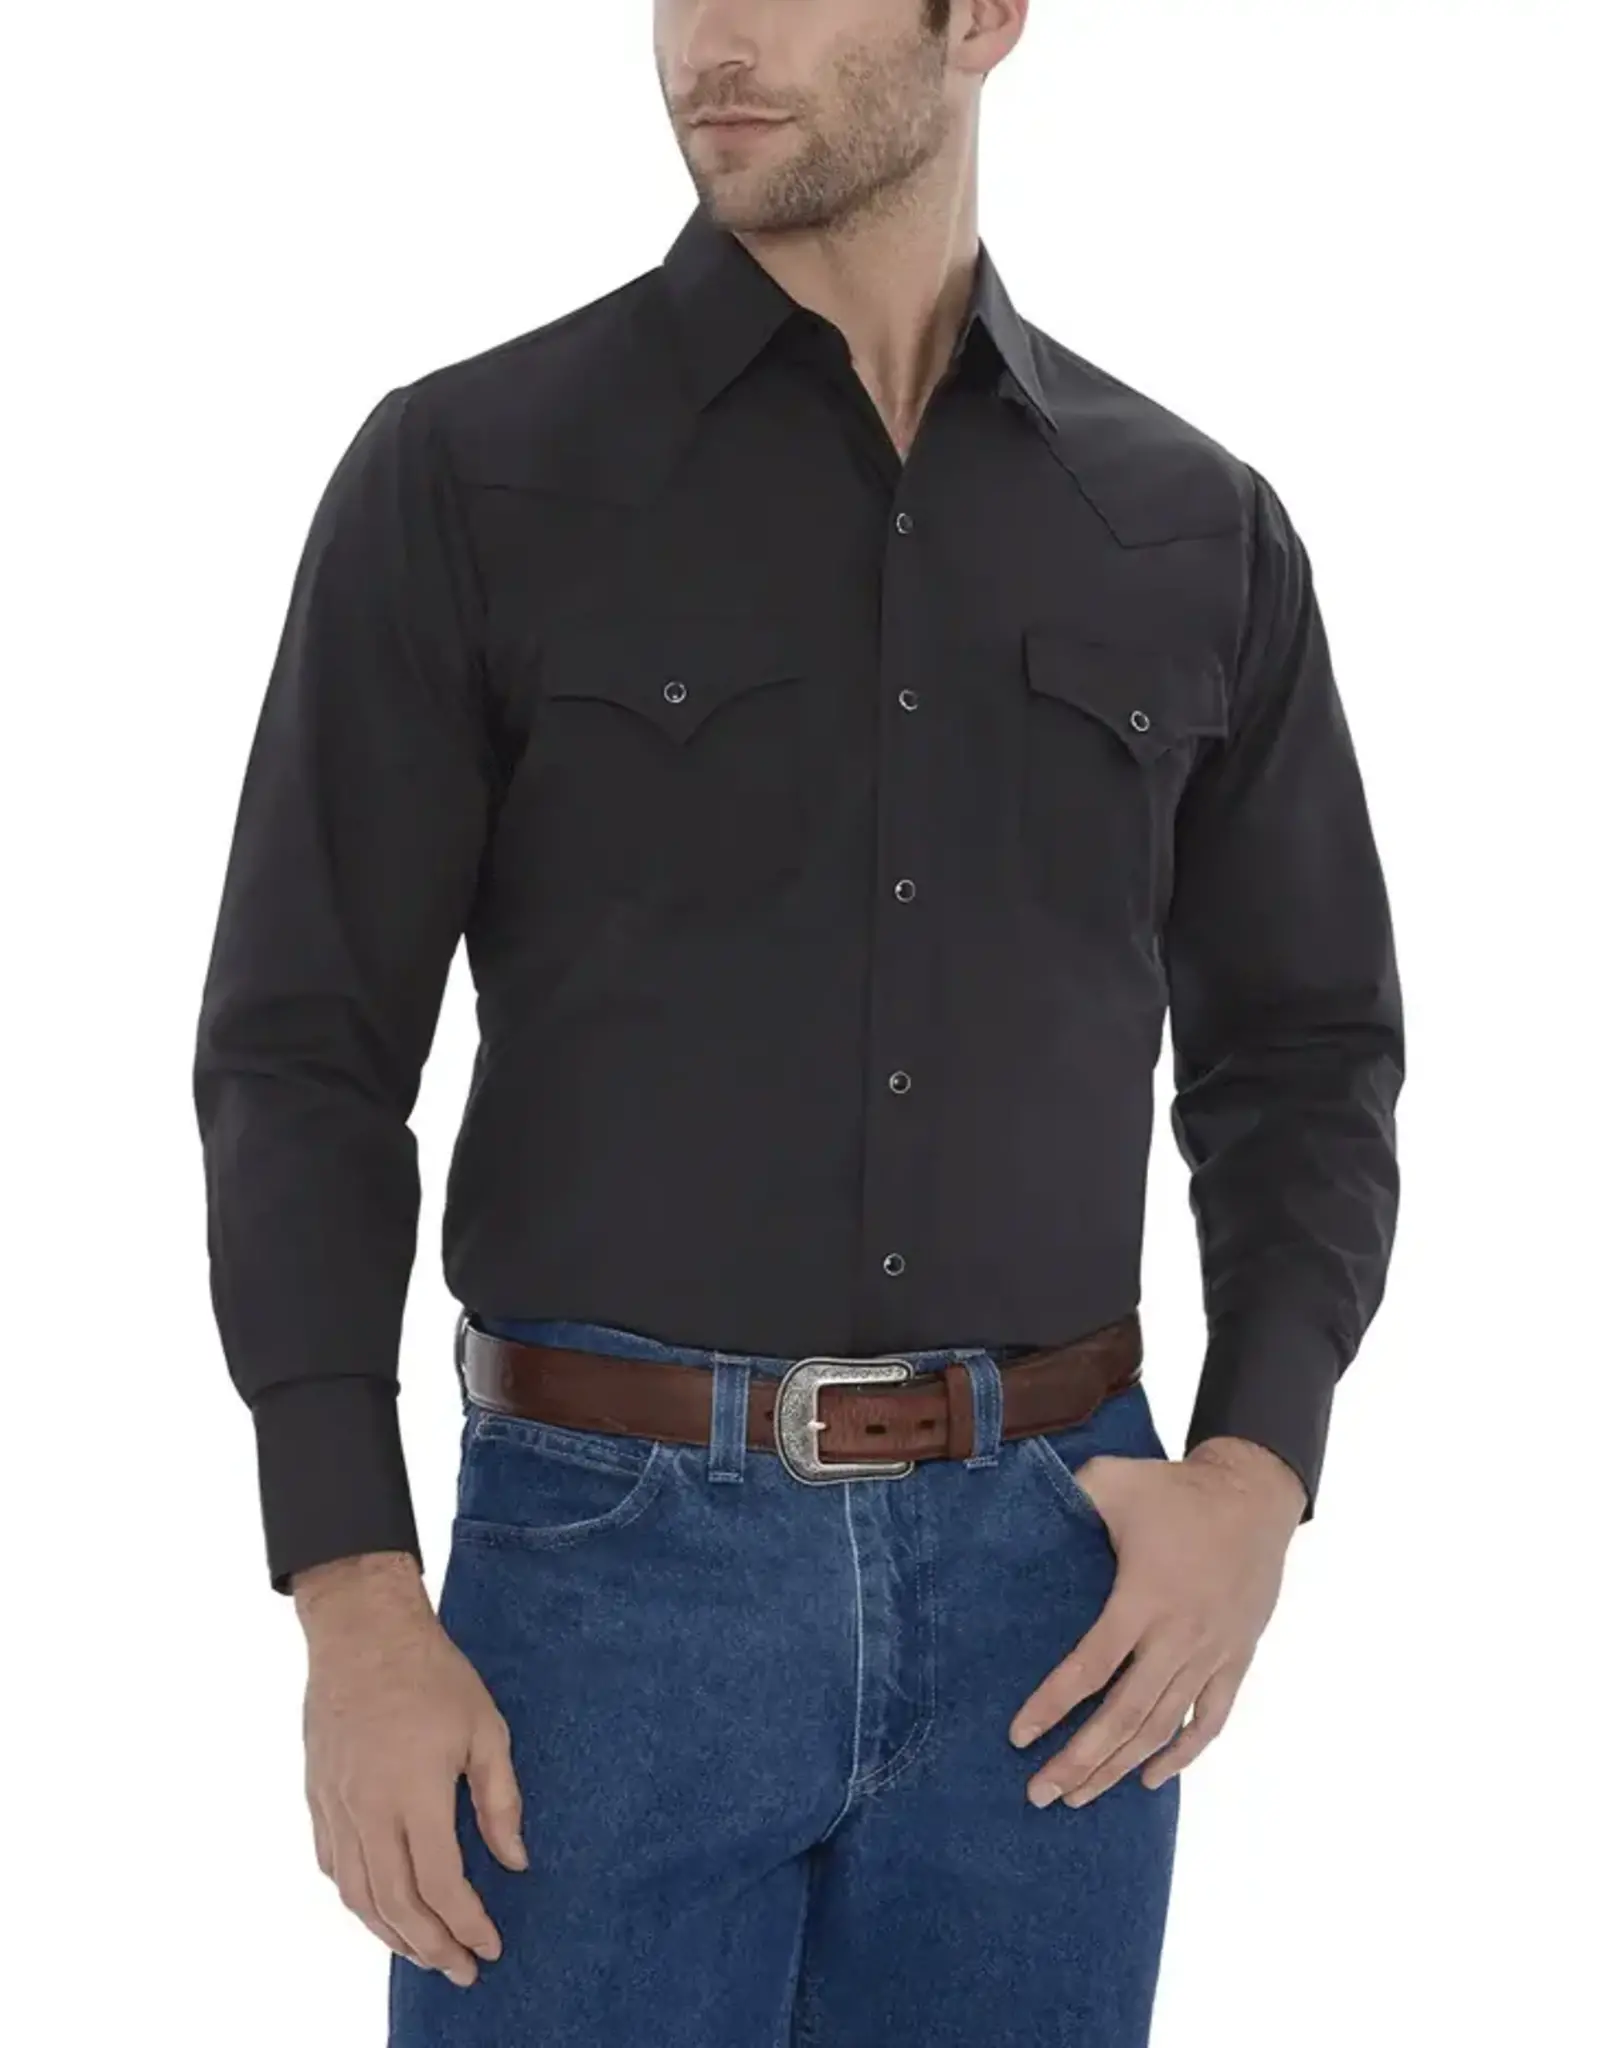 Ely Mens LS Shirt in Black Sz. 3X 15201905-89X